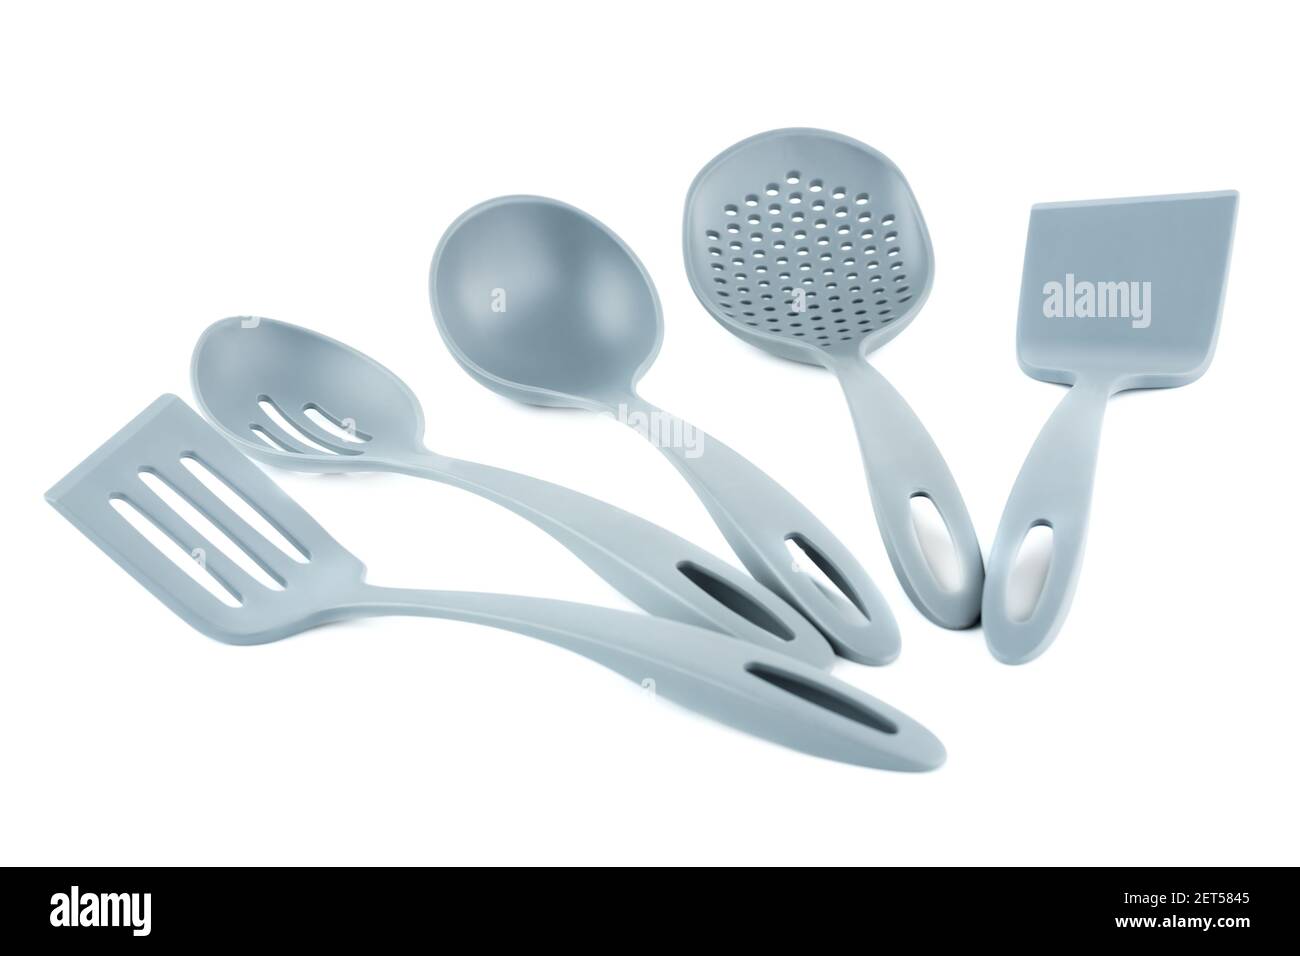 Set of gray plastic kitchen utensils isolated on white background. Stock Photo